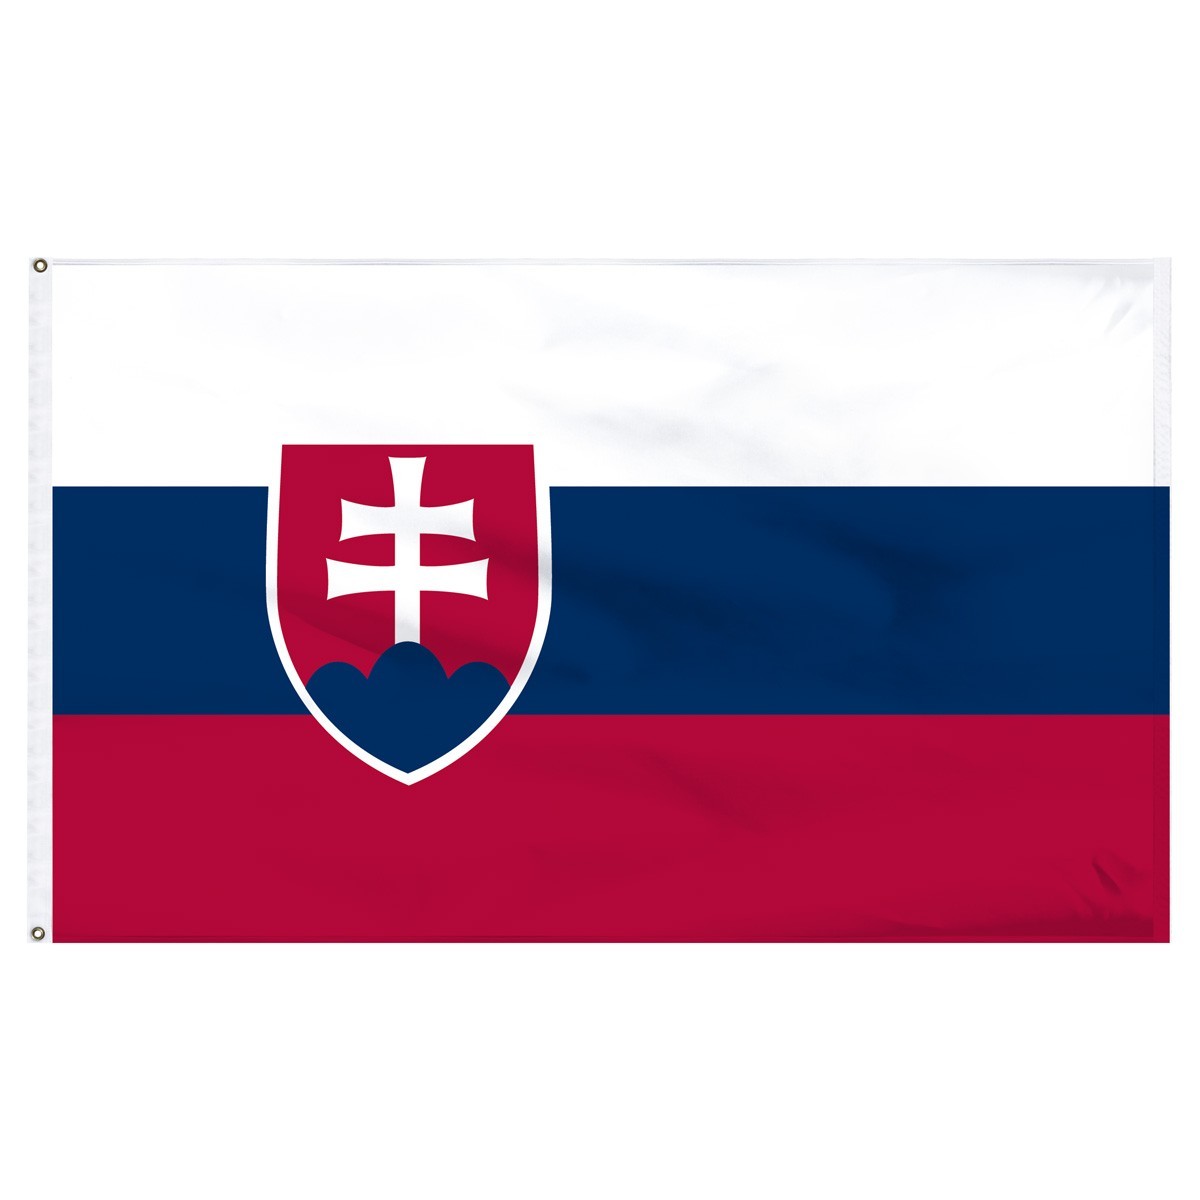 Slovakia Republic 5' x 8' Outdoor Nylon Flag